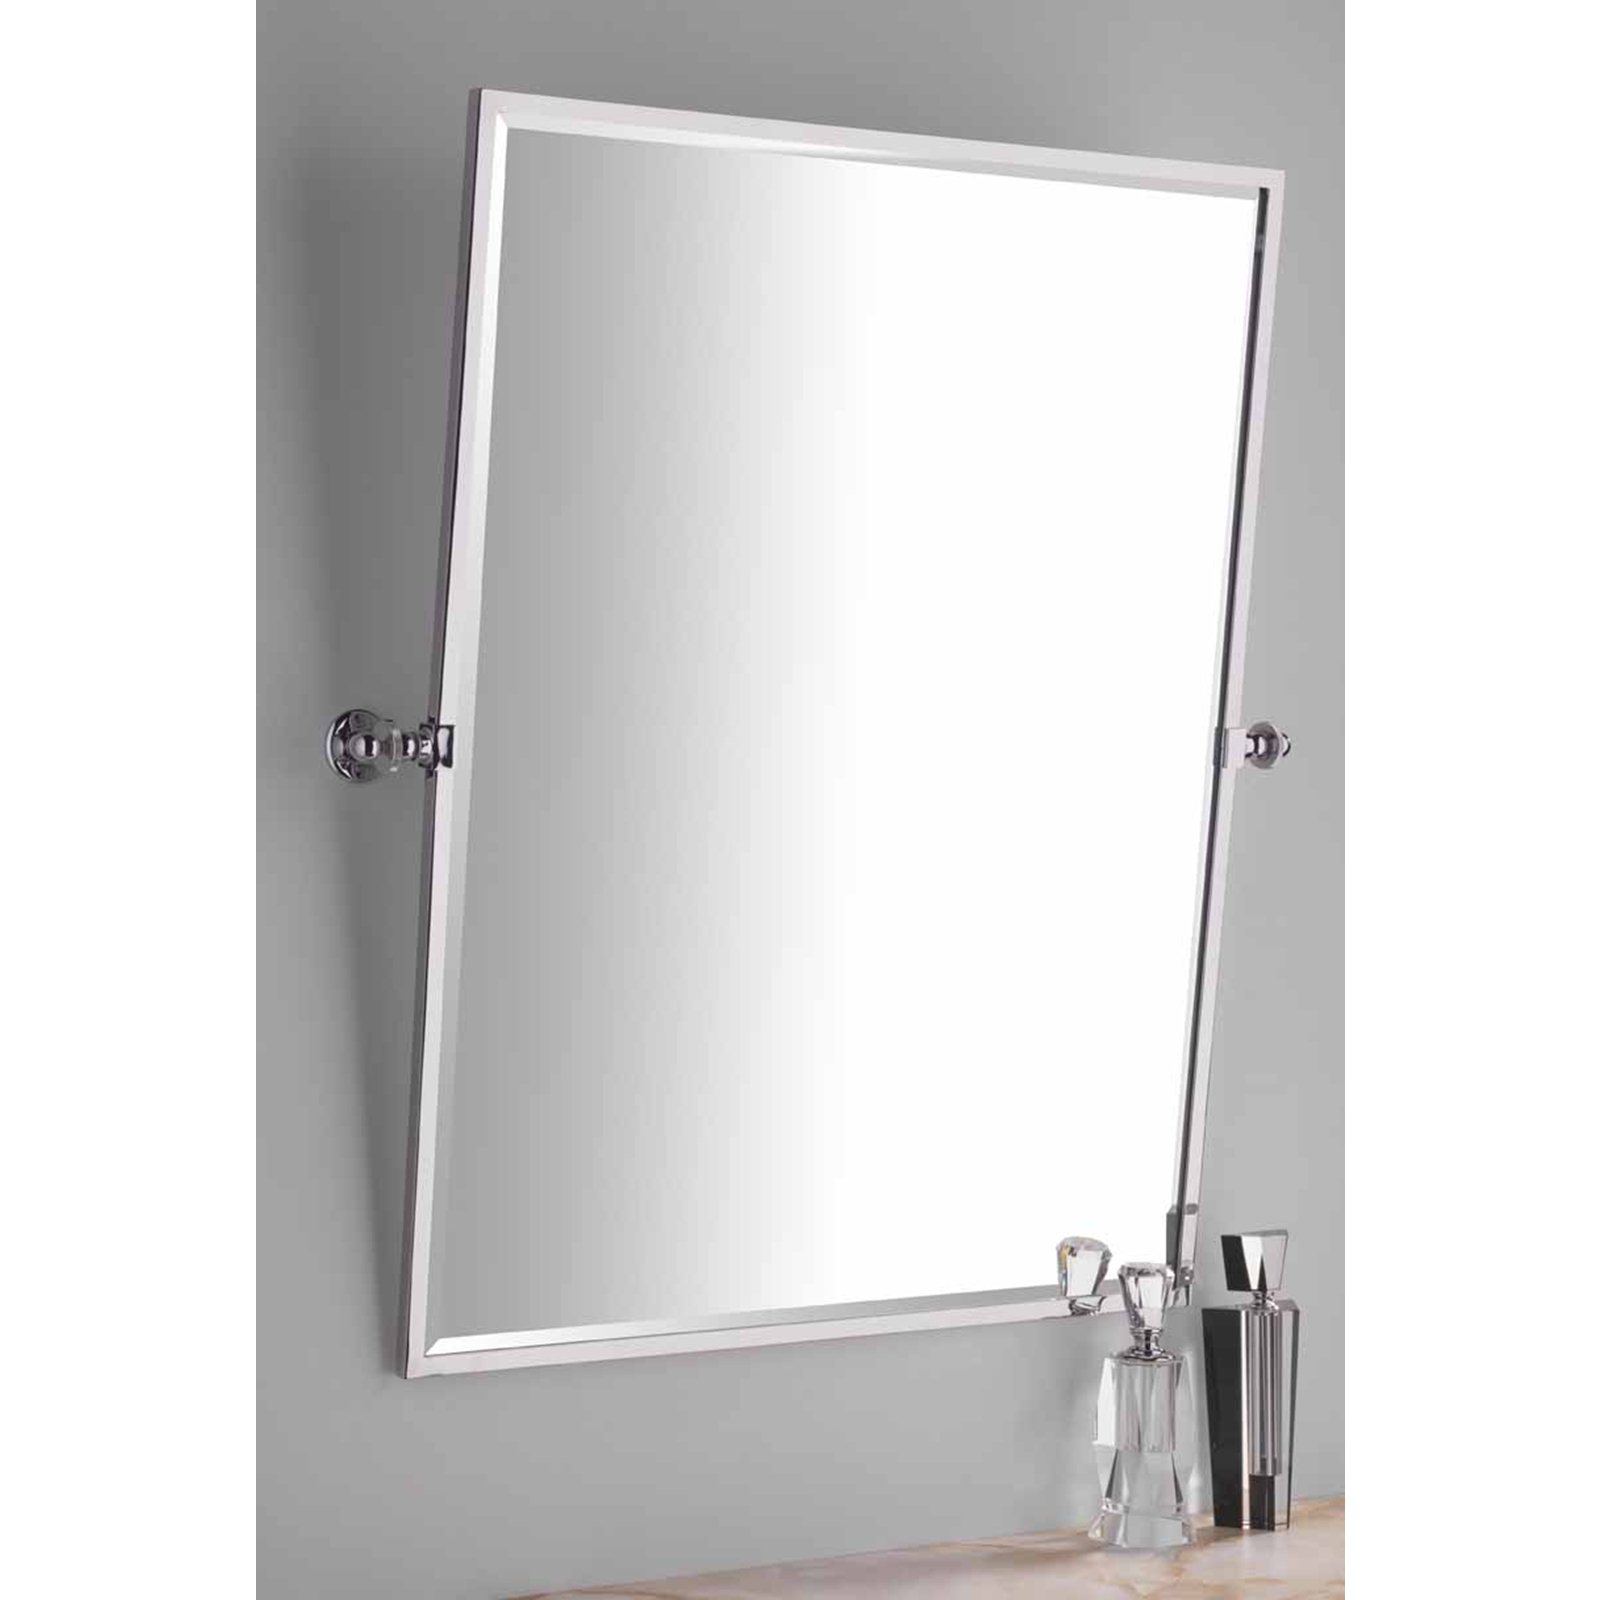 Bathroom Rectangular Tilting Mirror, Tilting Wall Mirror Bathroom